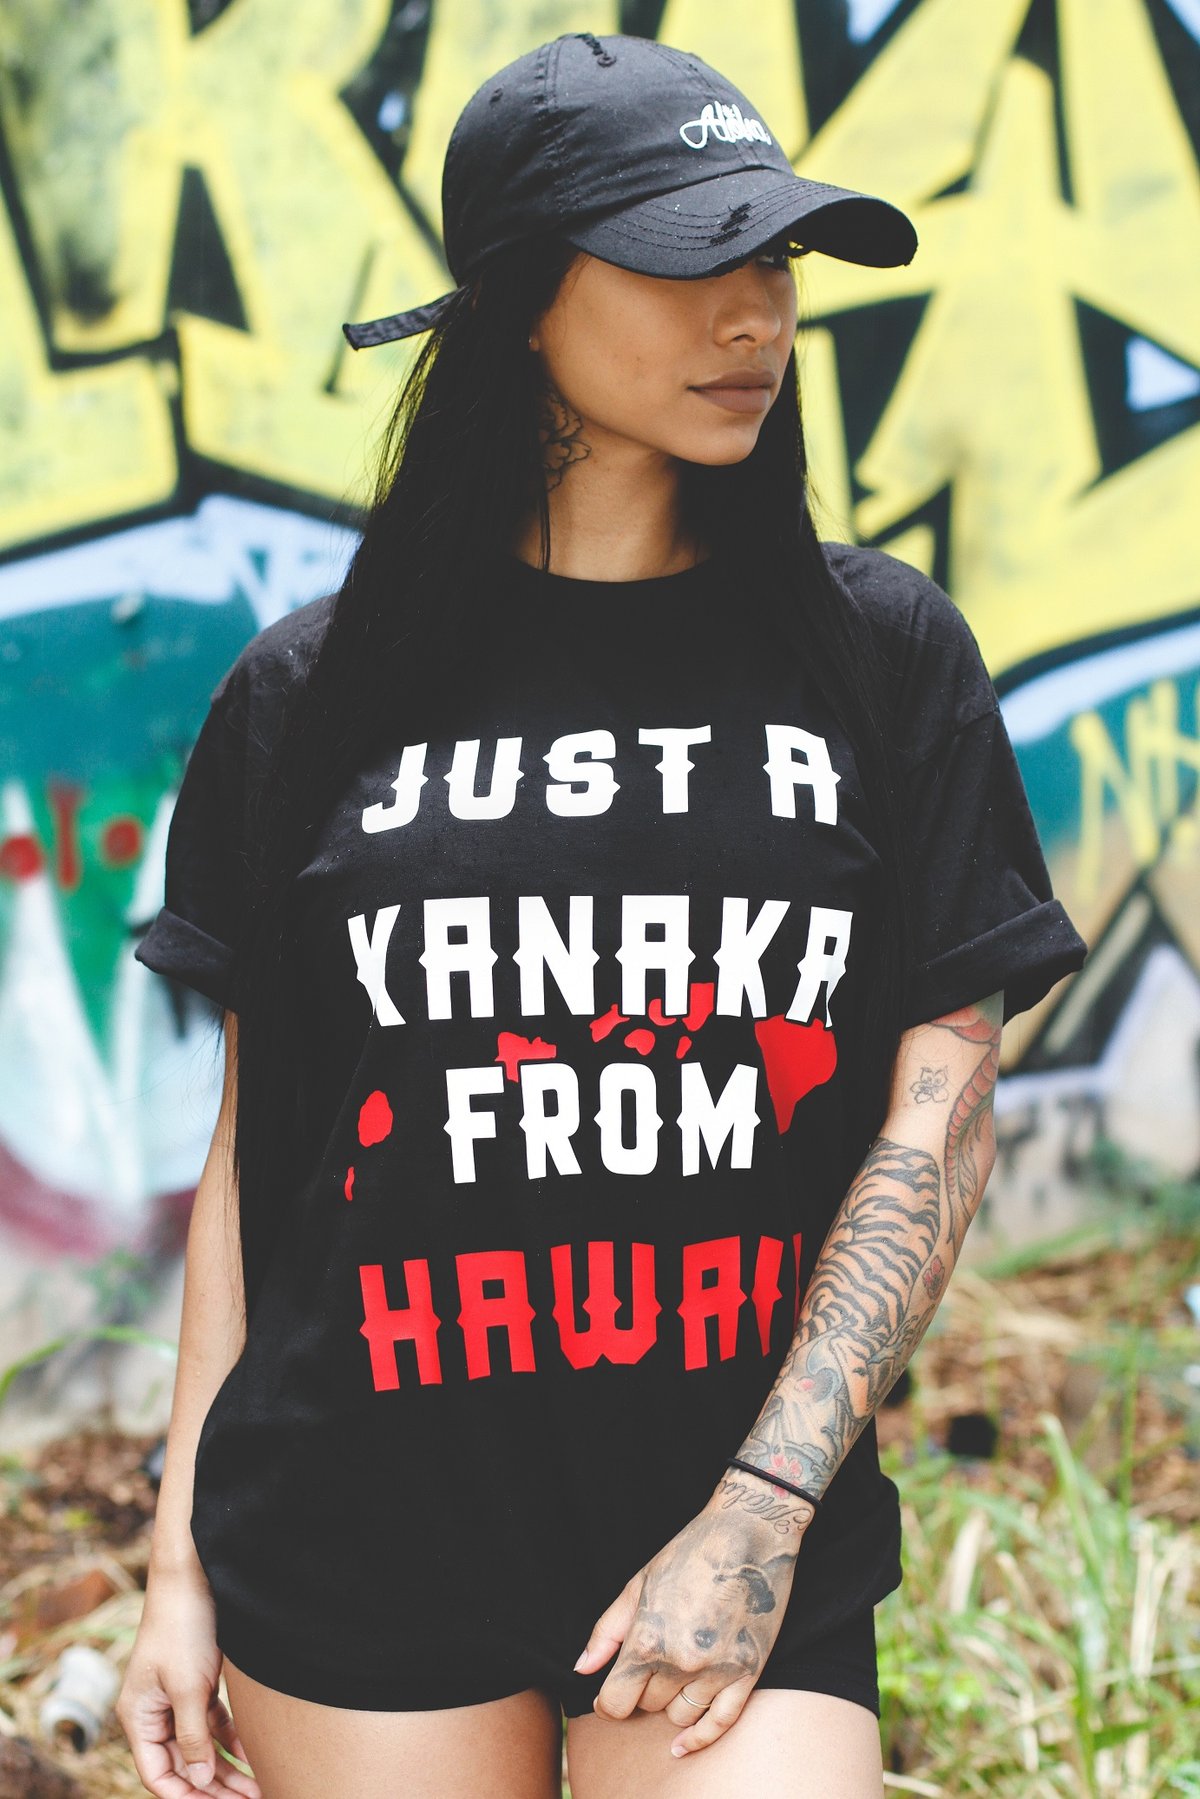 Just A Kanaka From Hawaii (Black/Red)